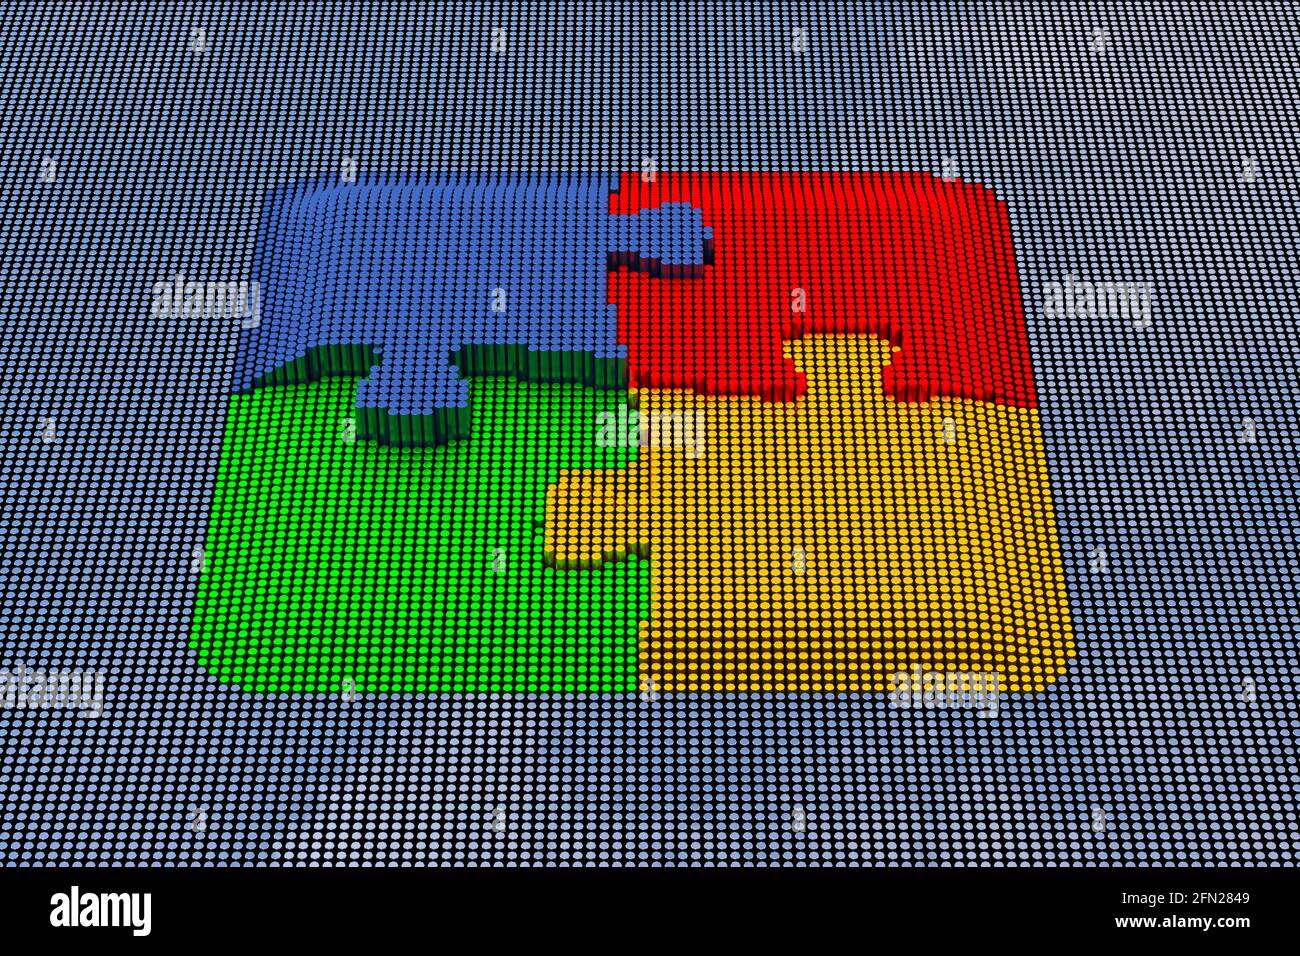 Pixel Art Style Puzzle. 3d Rendering Stock Photo - Alamy